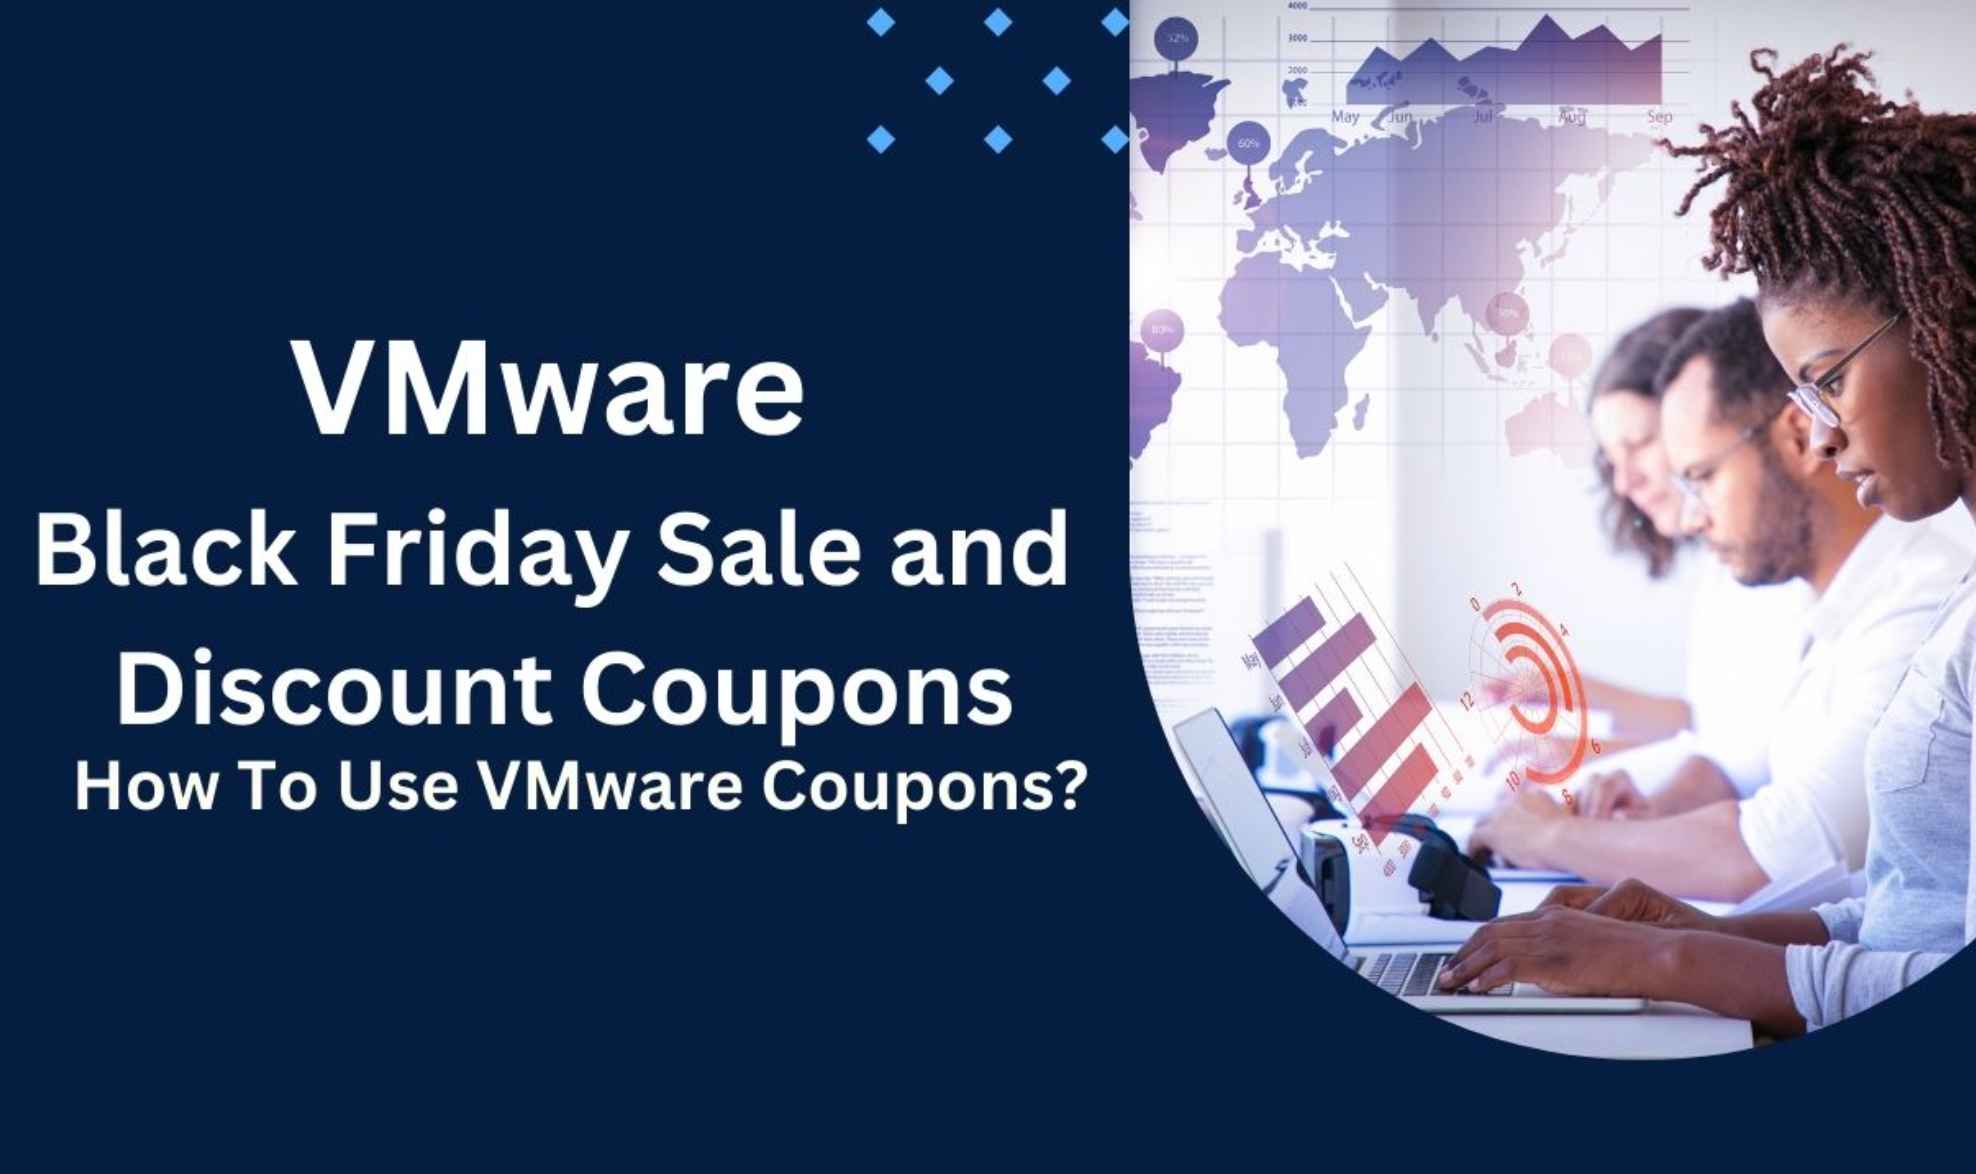 VMware Black Friday Sale